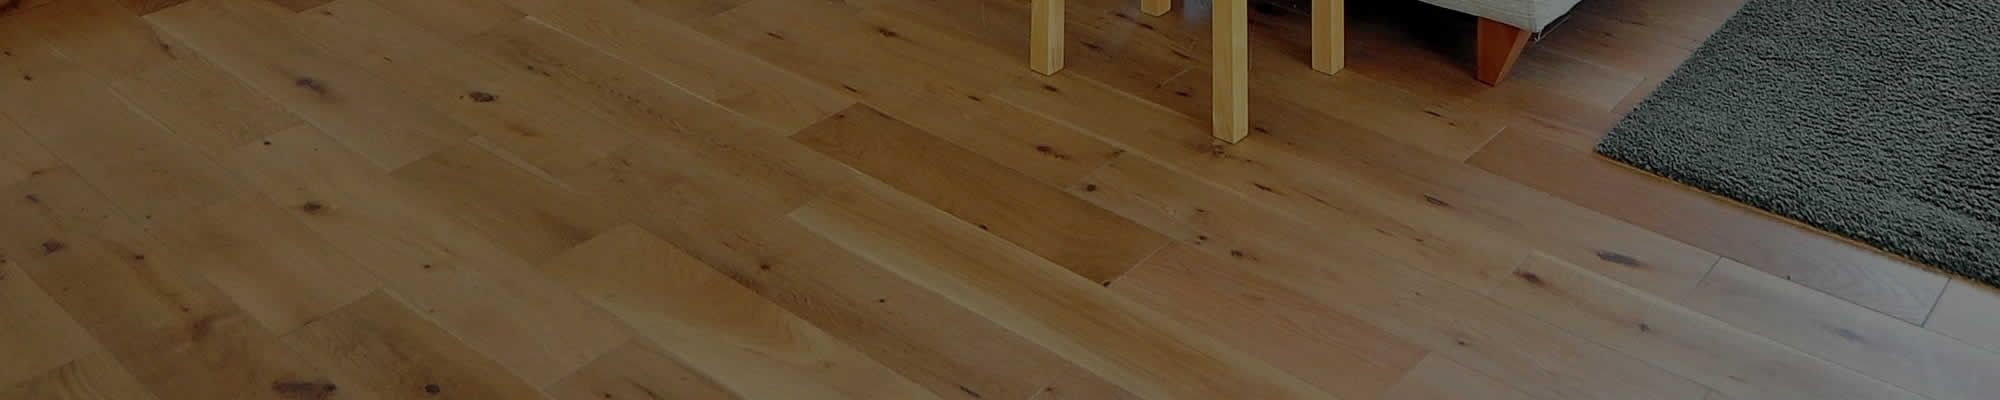 Hardwood Floor Resurfacing Hales Corners WI